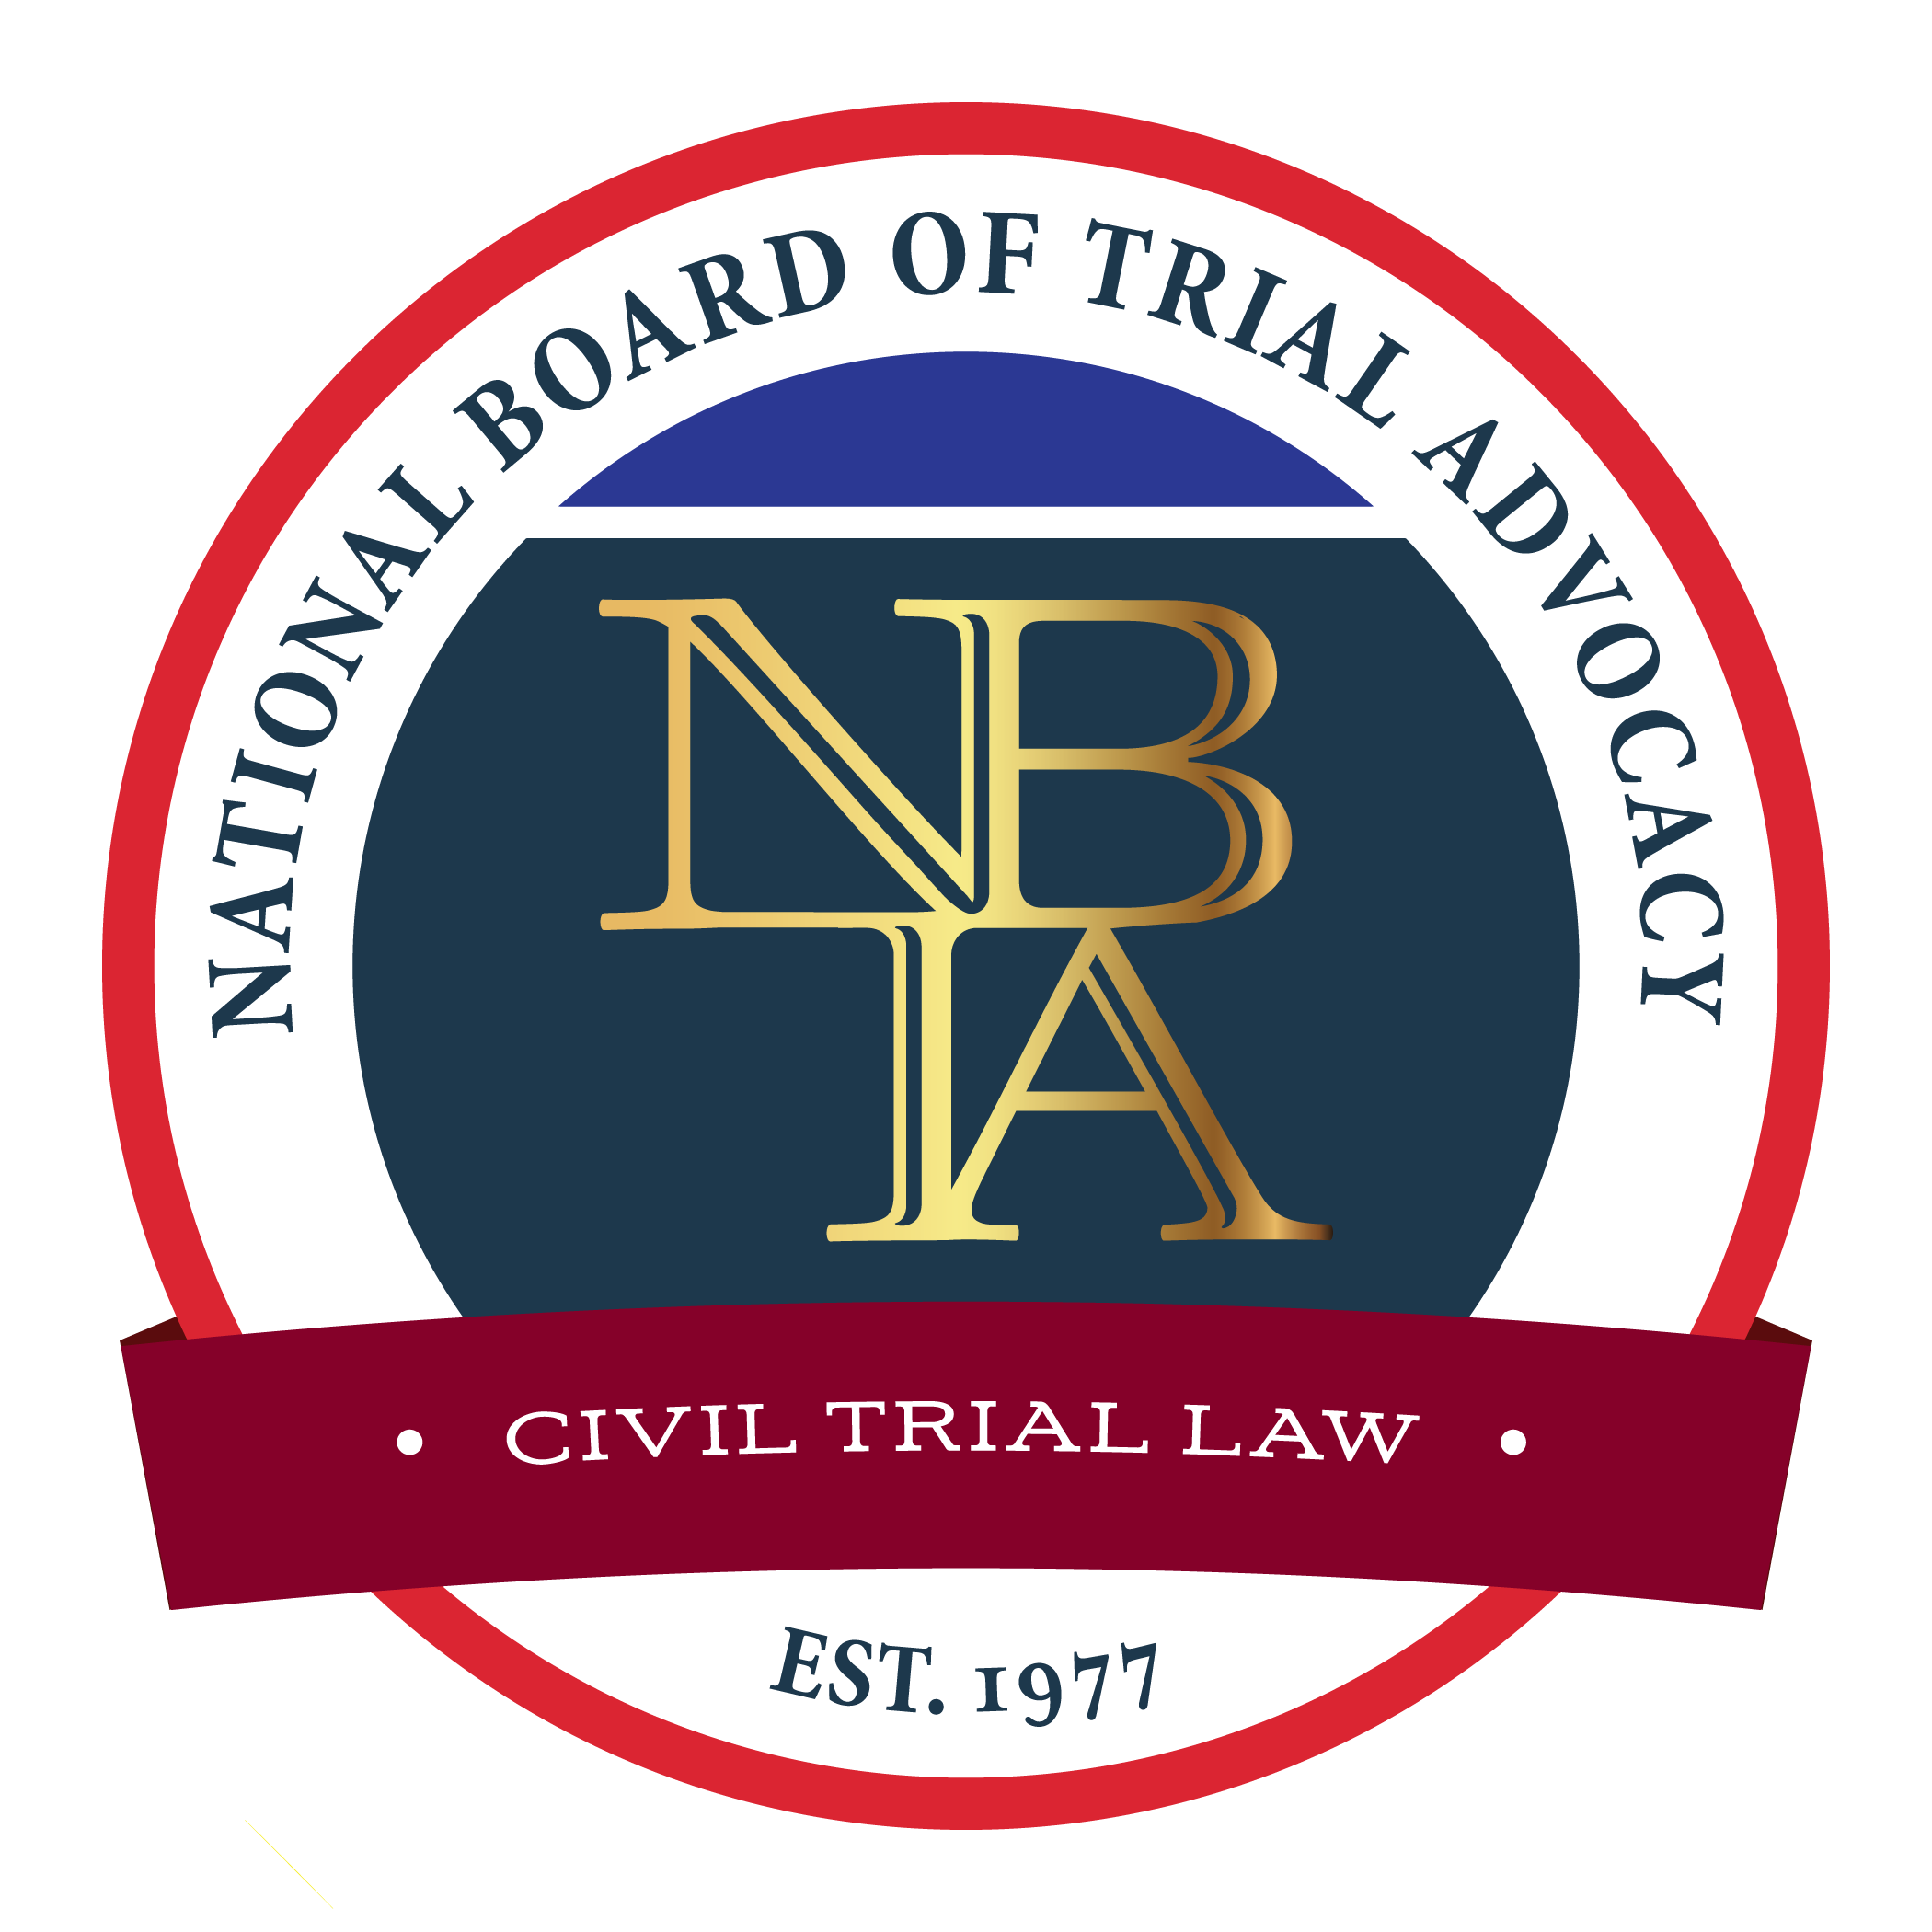 National Board of Trial Advocacy - Robert B. Adelman